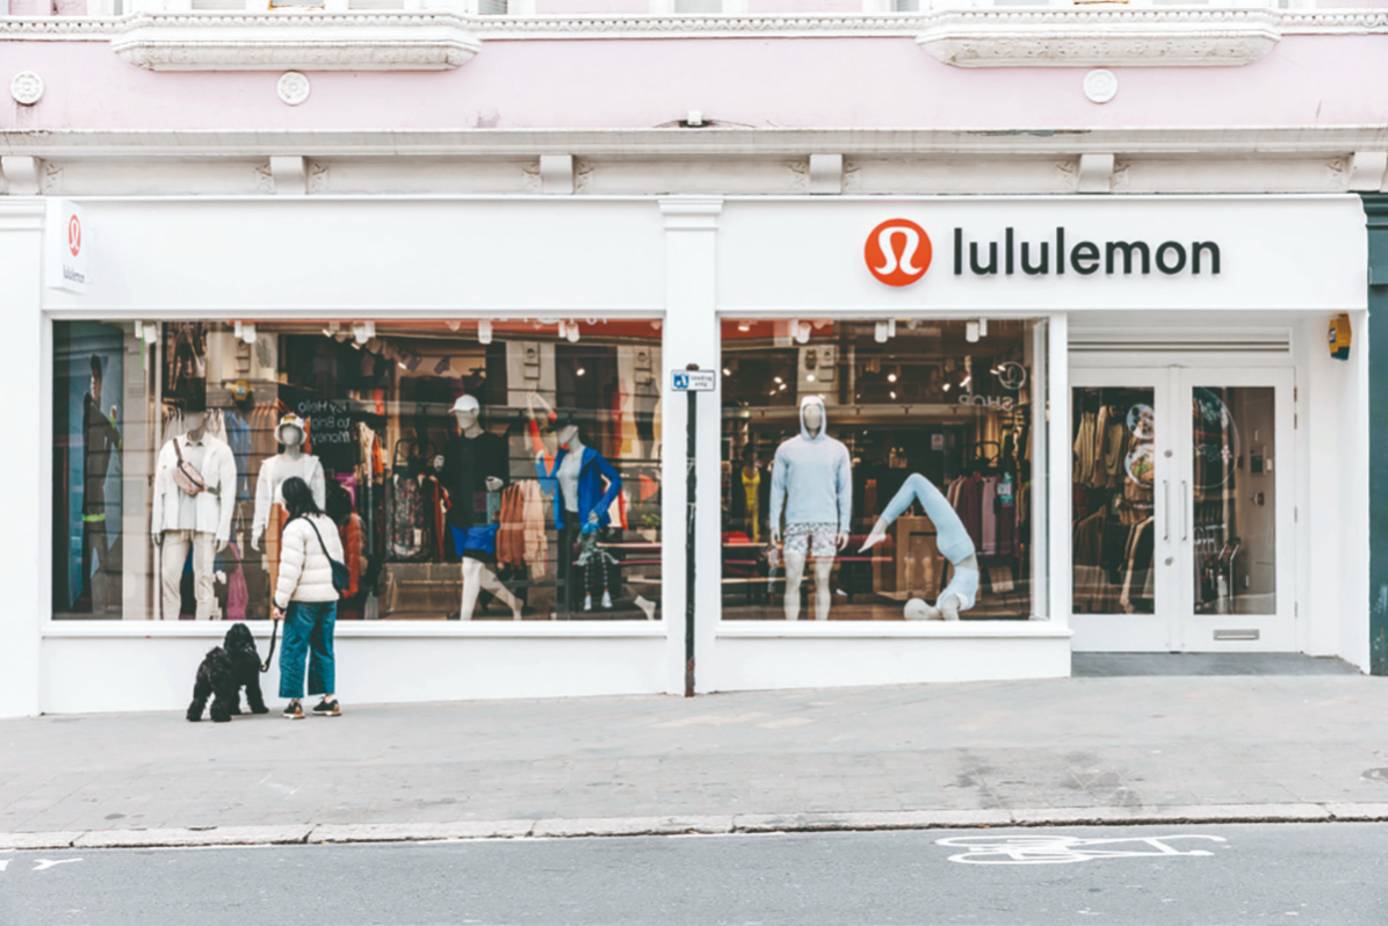 LULU Stock: the Company Just Raised its Revenue Forecast - PressReach